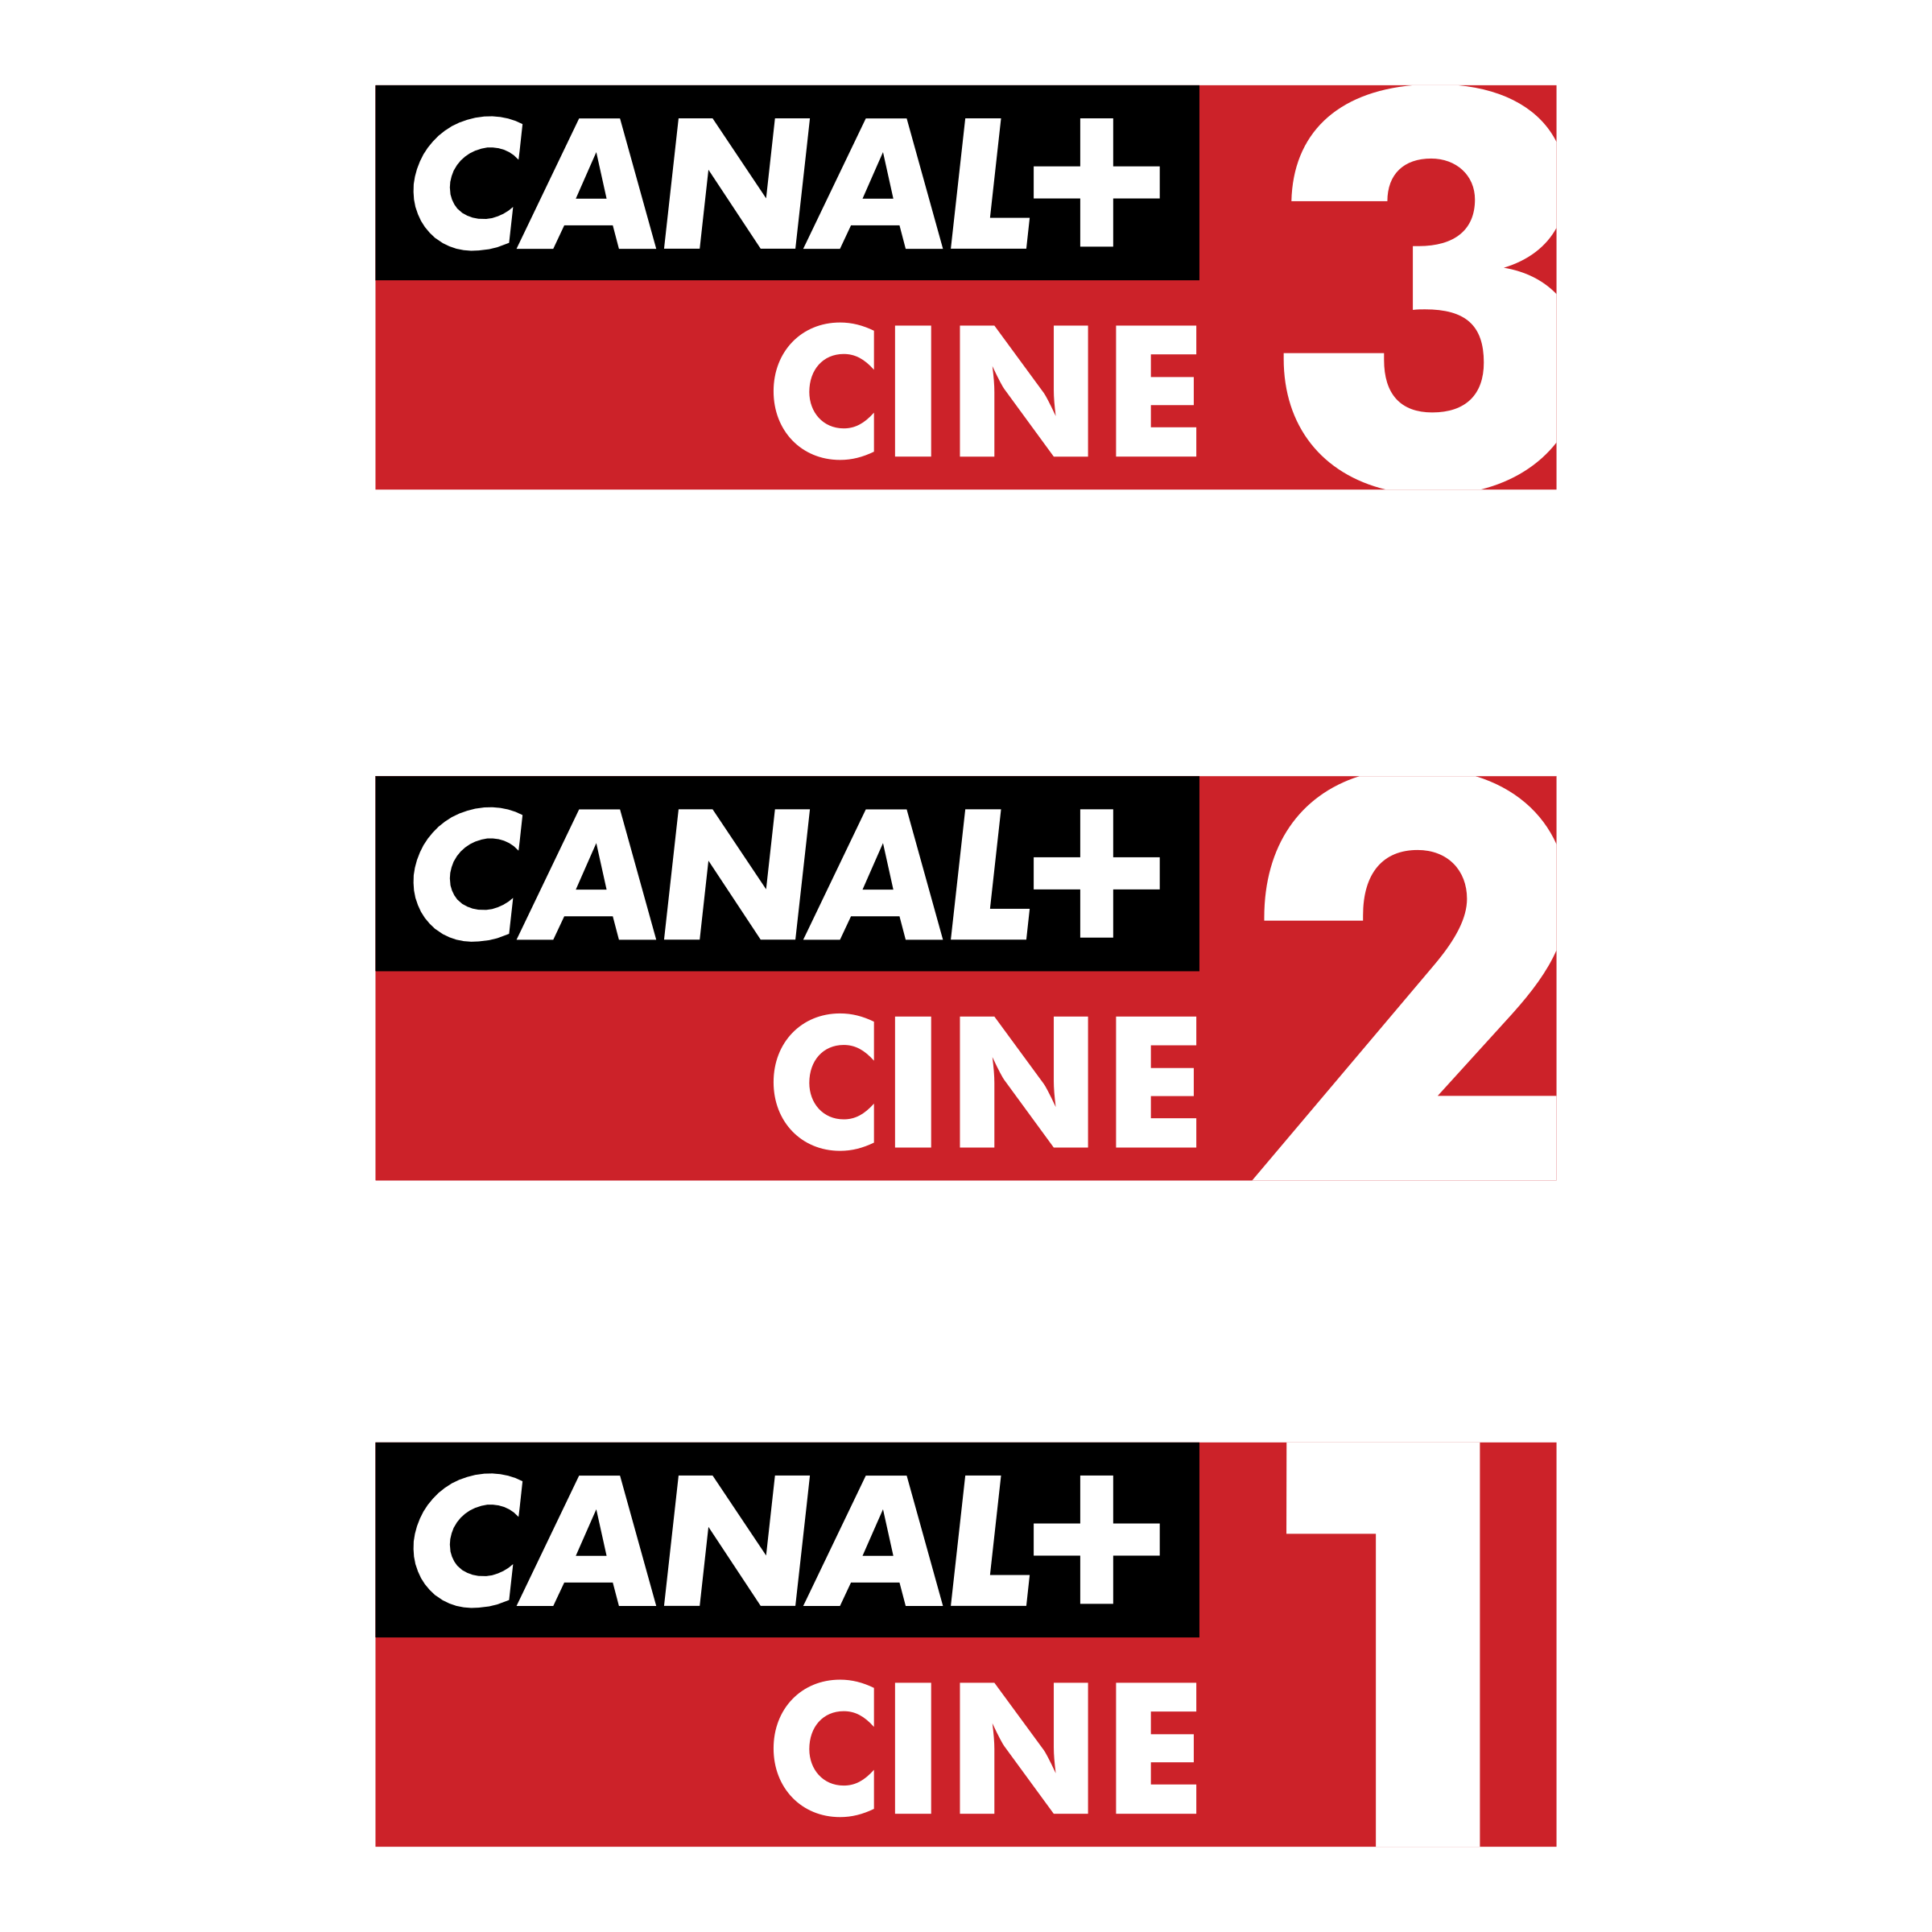 Cine Logo - Canal+ Cine Logo PNG Transparent & SVG Vector - Freebie Supply